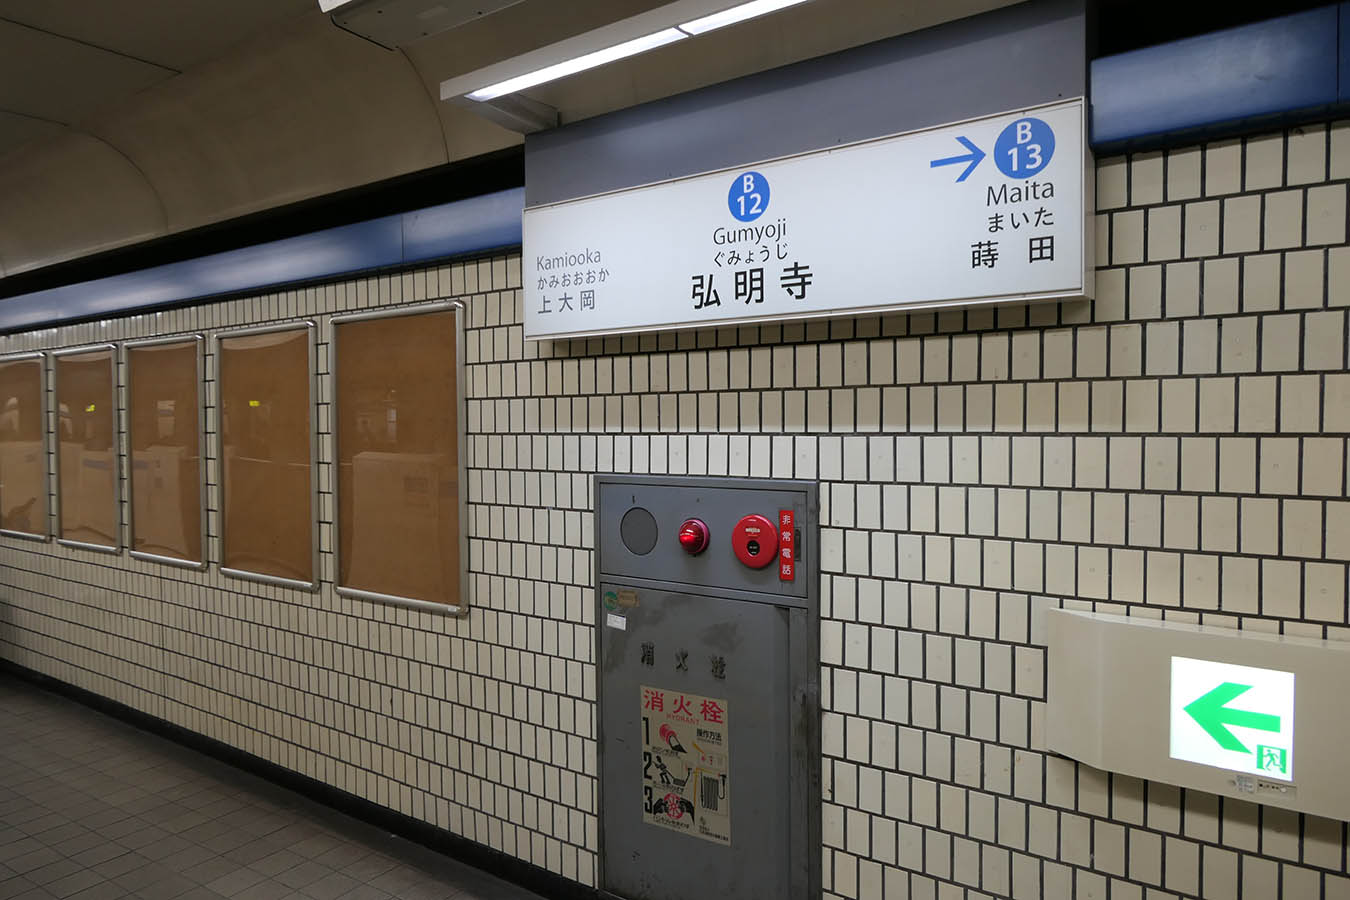 B12 横浜市営地下鉄ブルーライン 弘明寺駅 ちかてつと駅の壁